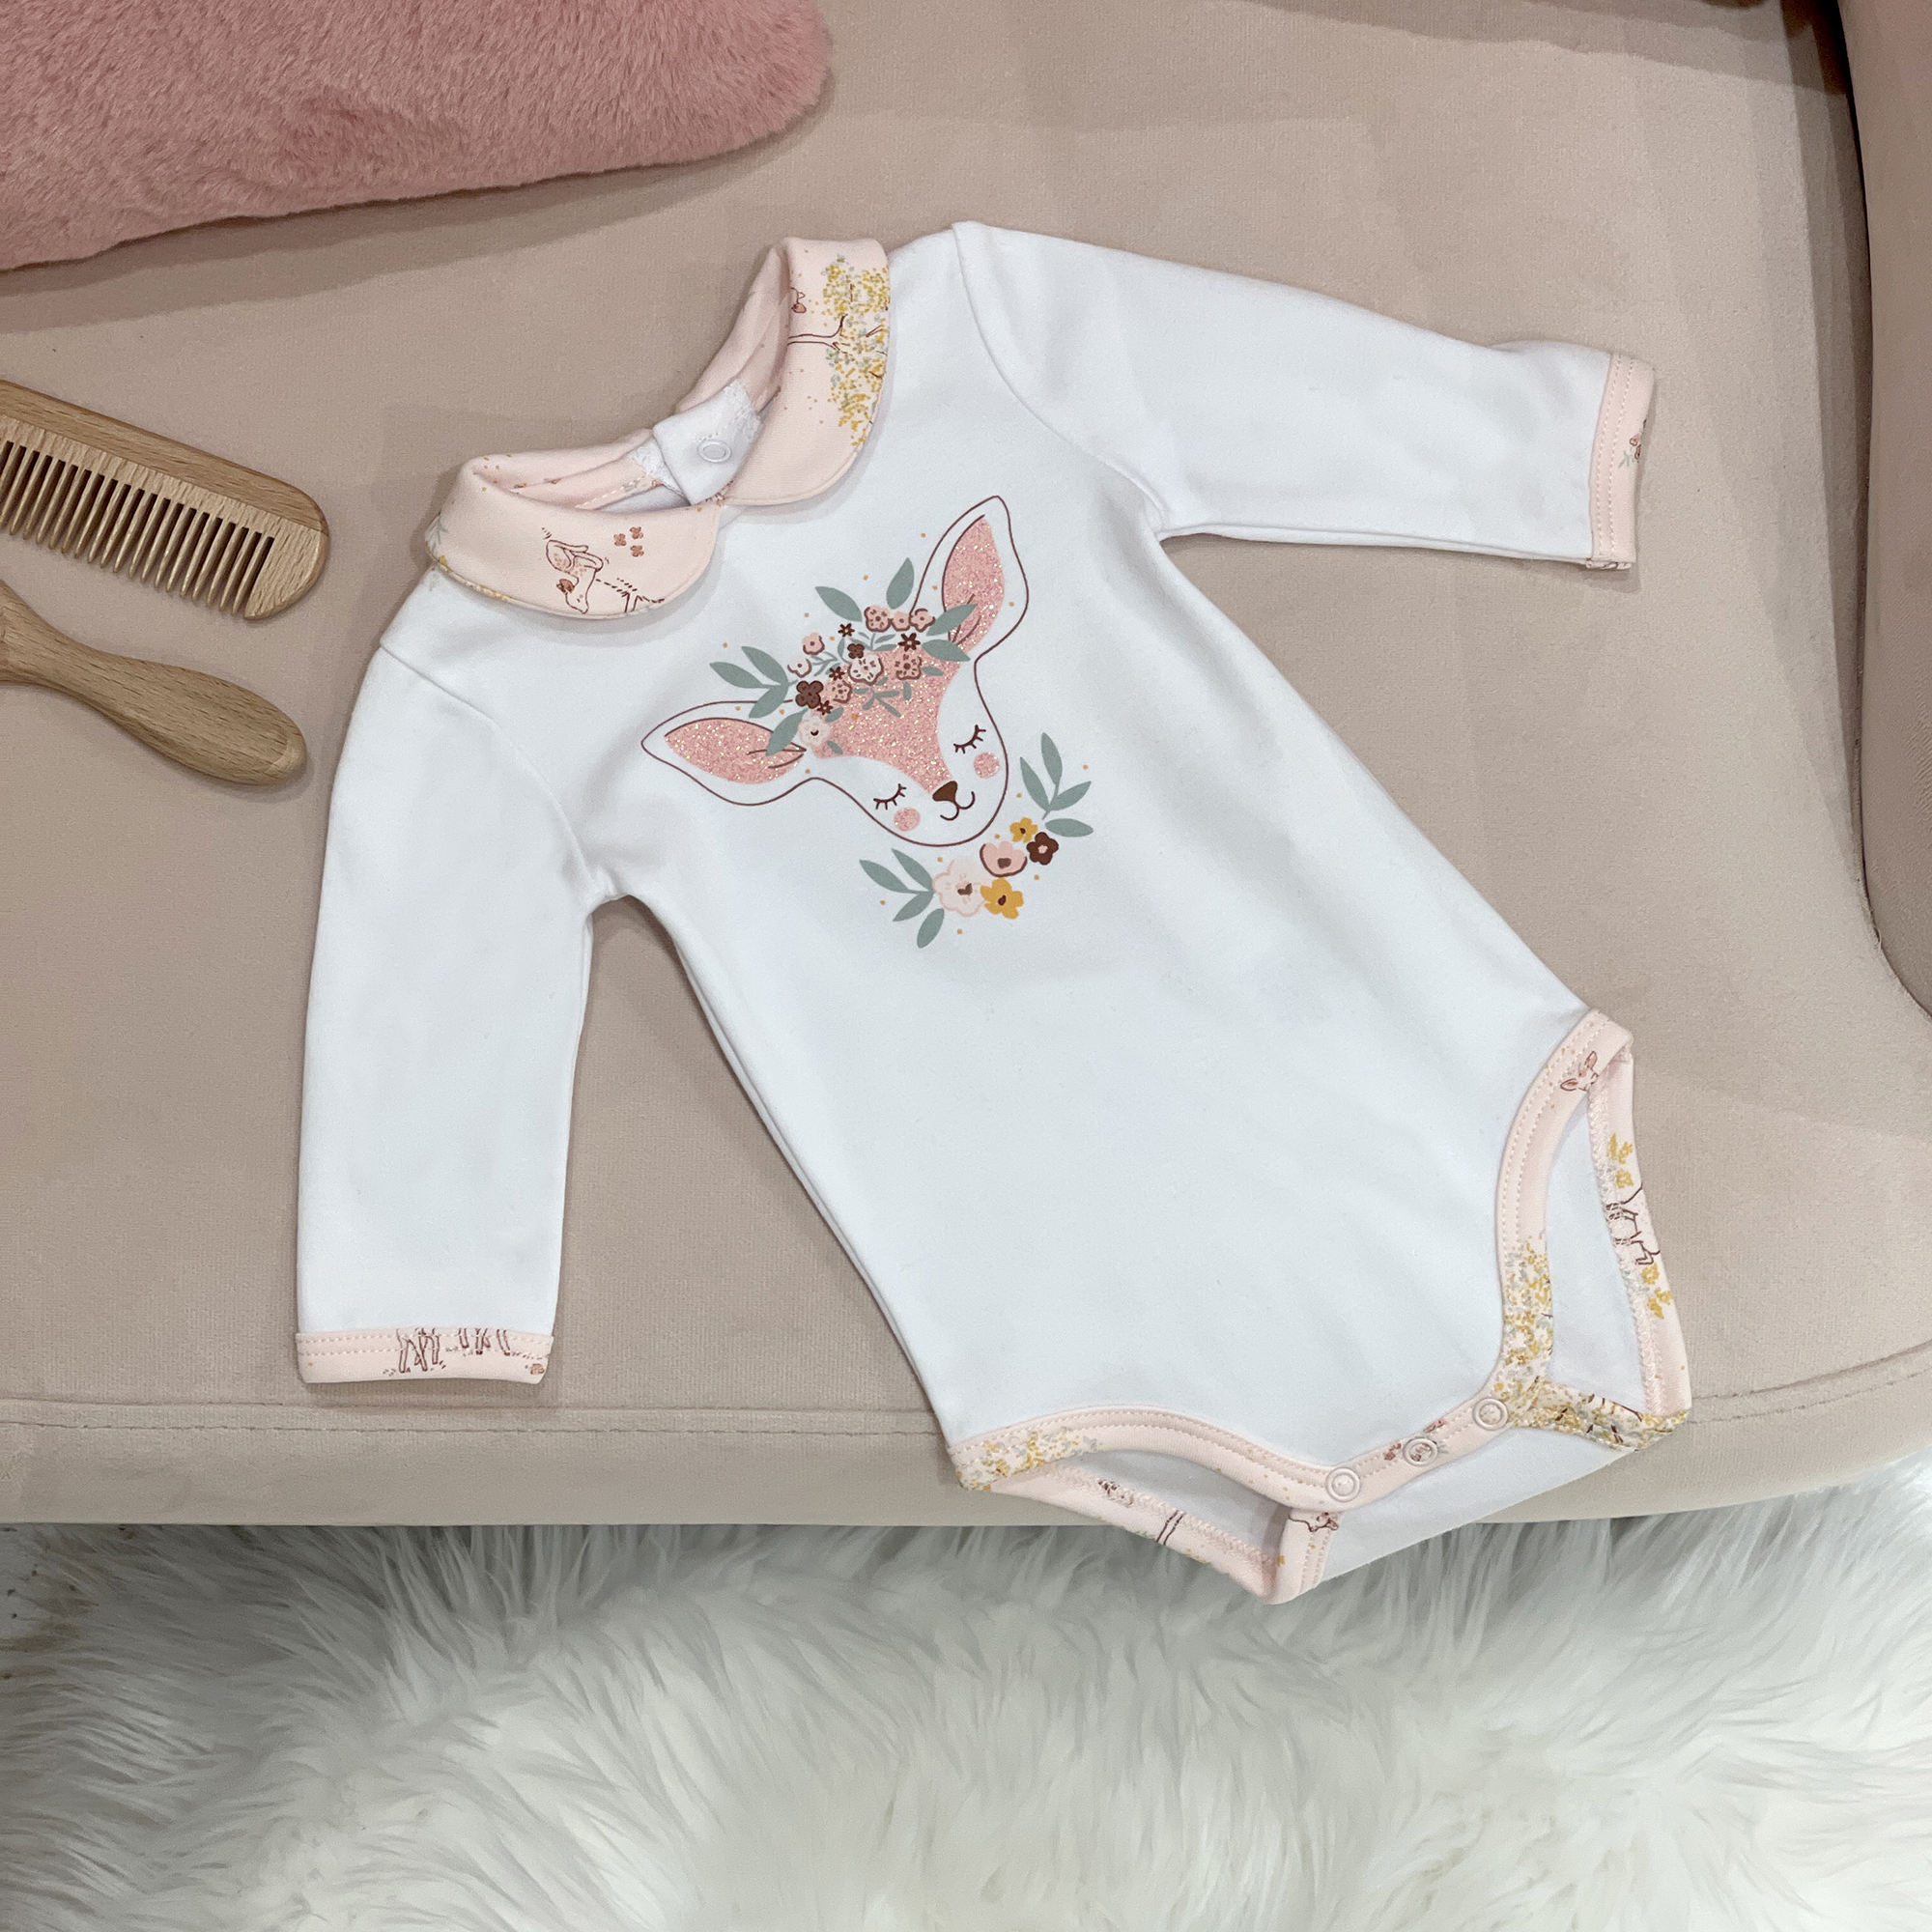 Novelty-design baby onesie CARREMENT BEAU for GIRL